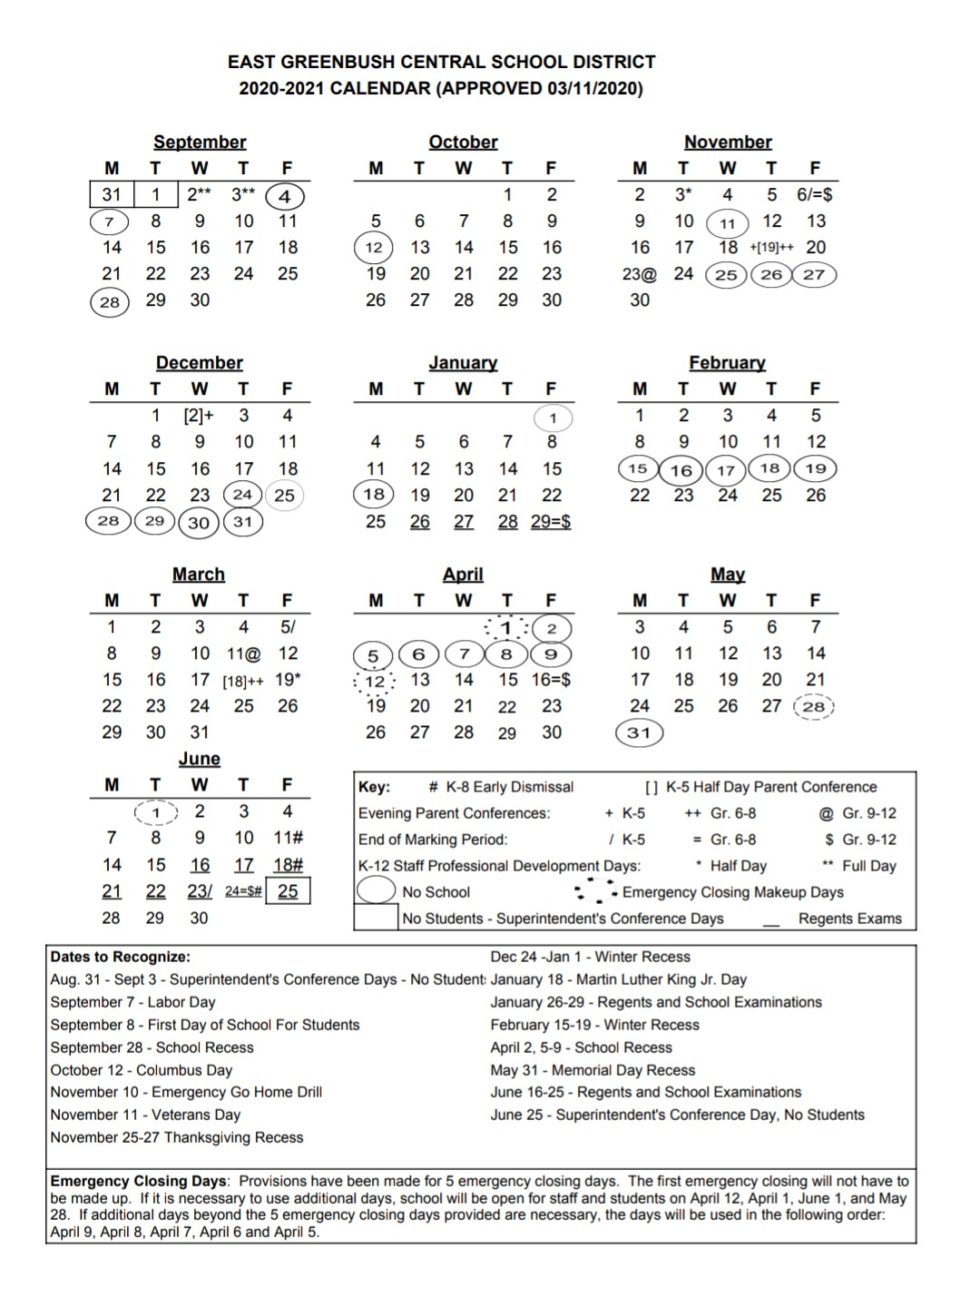 202021 School Calendar is Now Available East Greenbush CSD